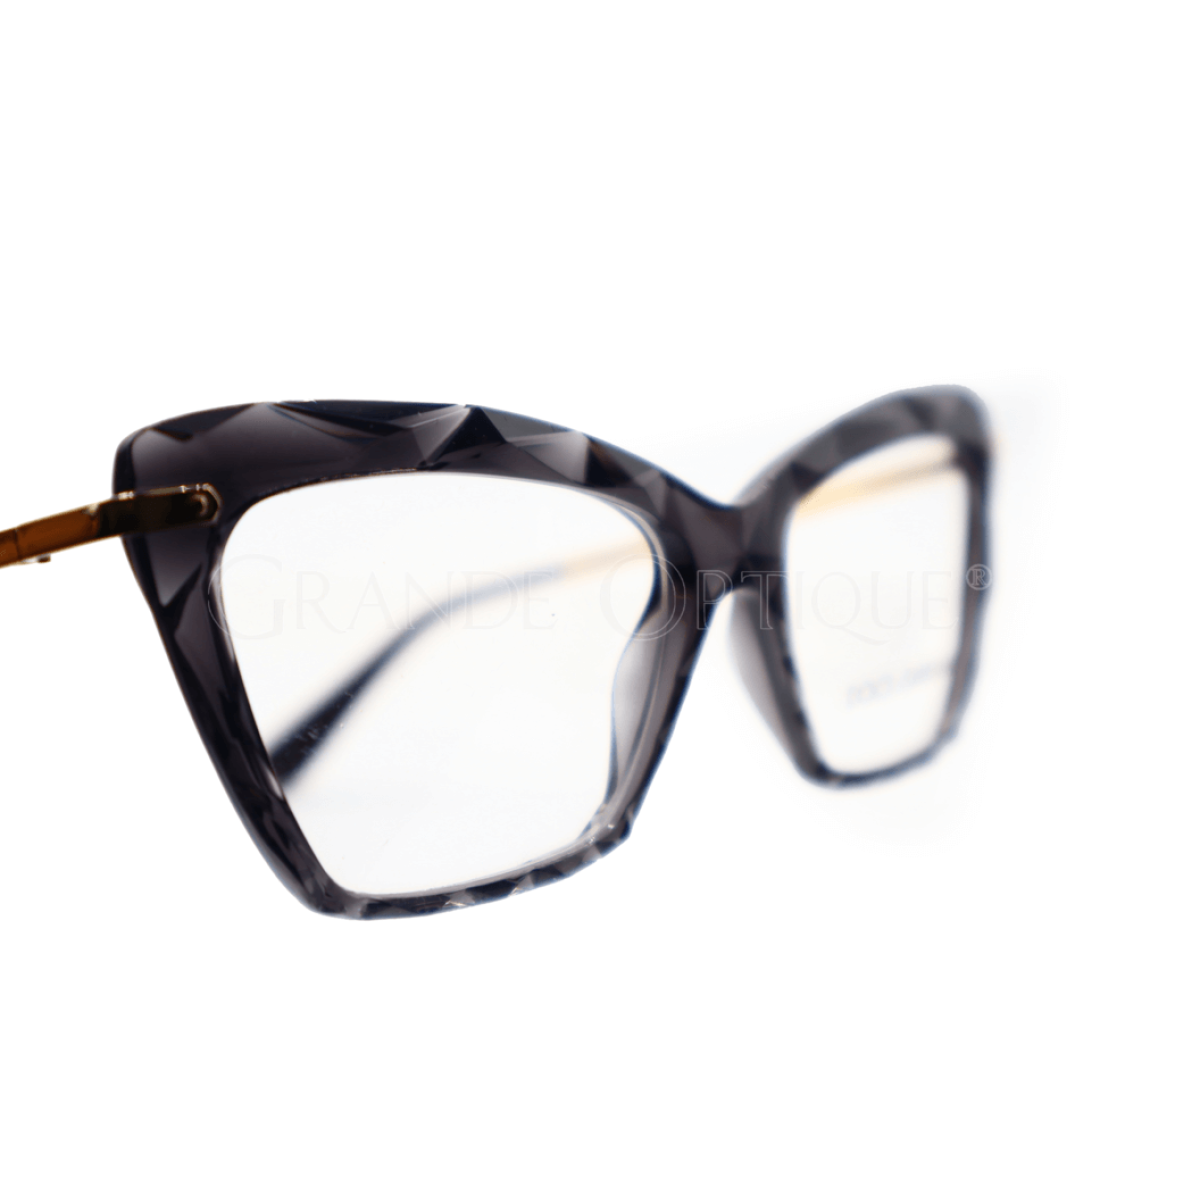 Rame de ochelari Dolce&Gabbana DG5025 504 53